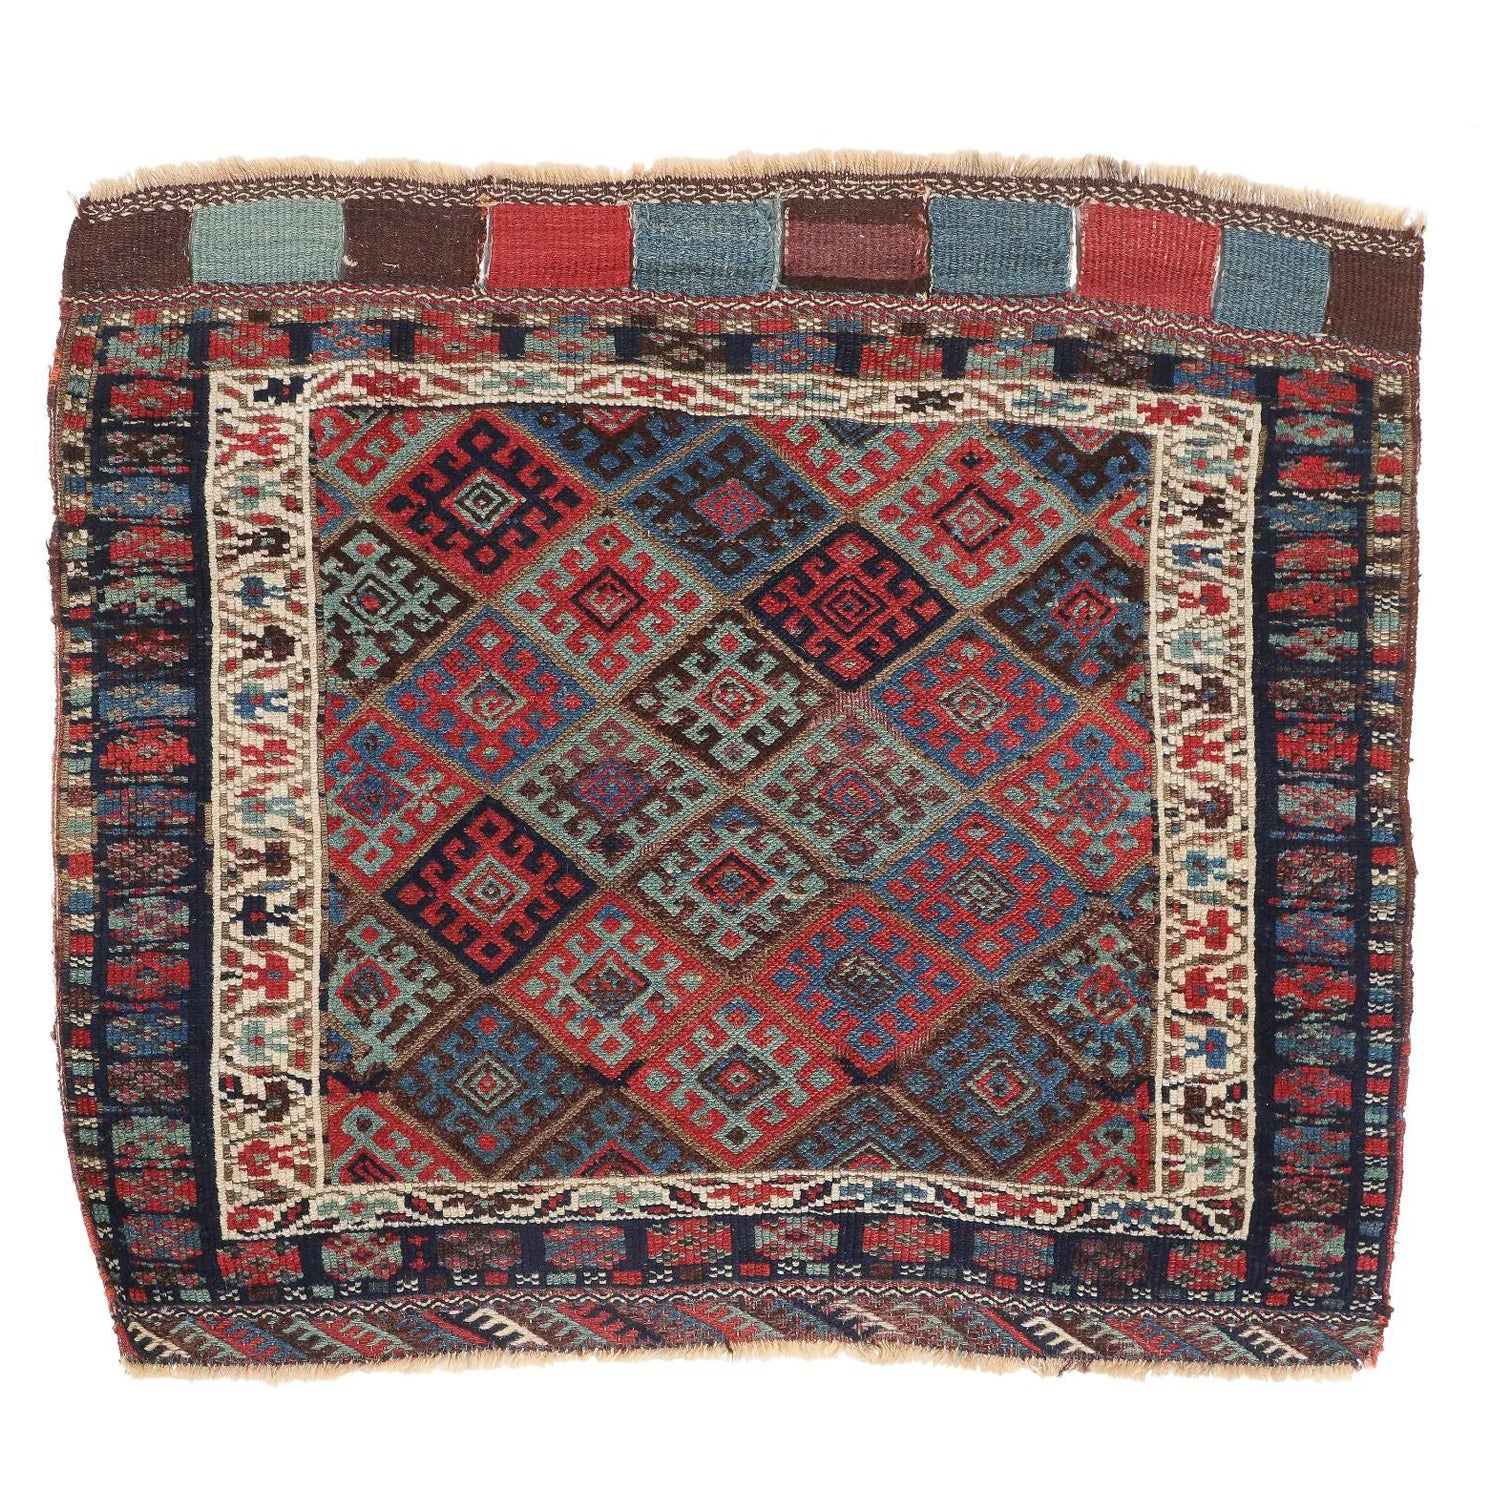 Handmade Antique Persian Collectible Kurdish Jaf Rug 2.9' x 3.3', 1870s - 2B27 For Sale